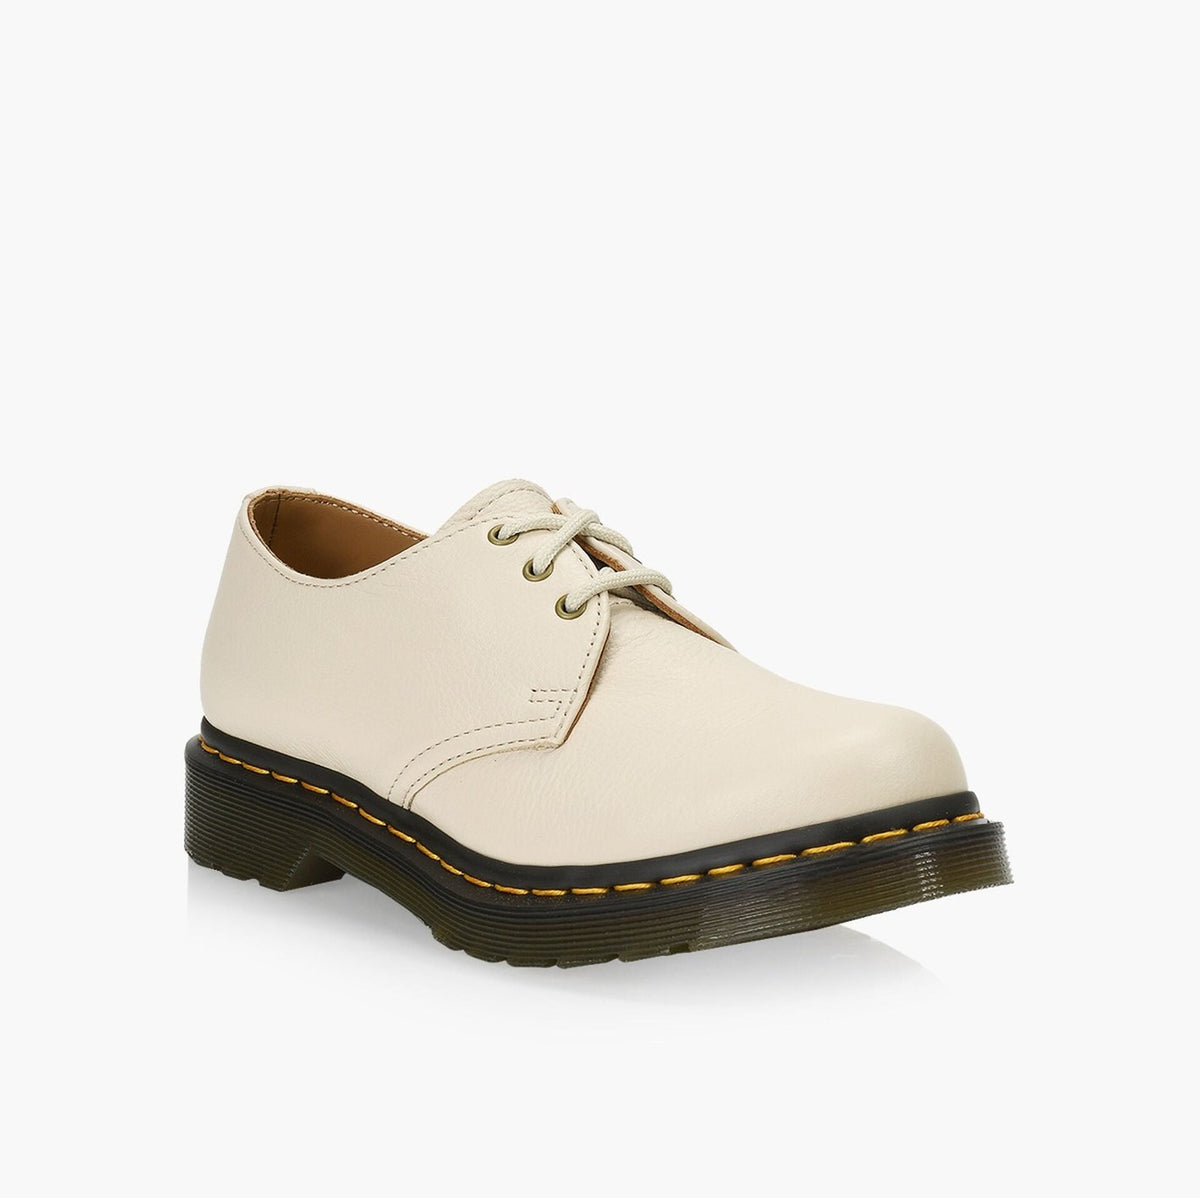 Dr. Martens 1461 Oxford Shoe